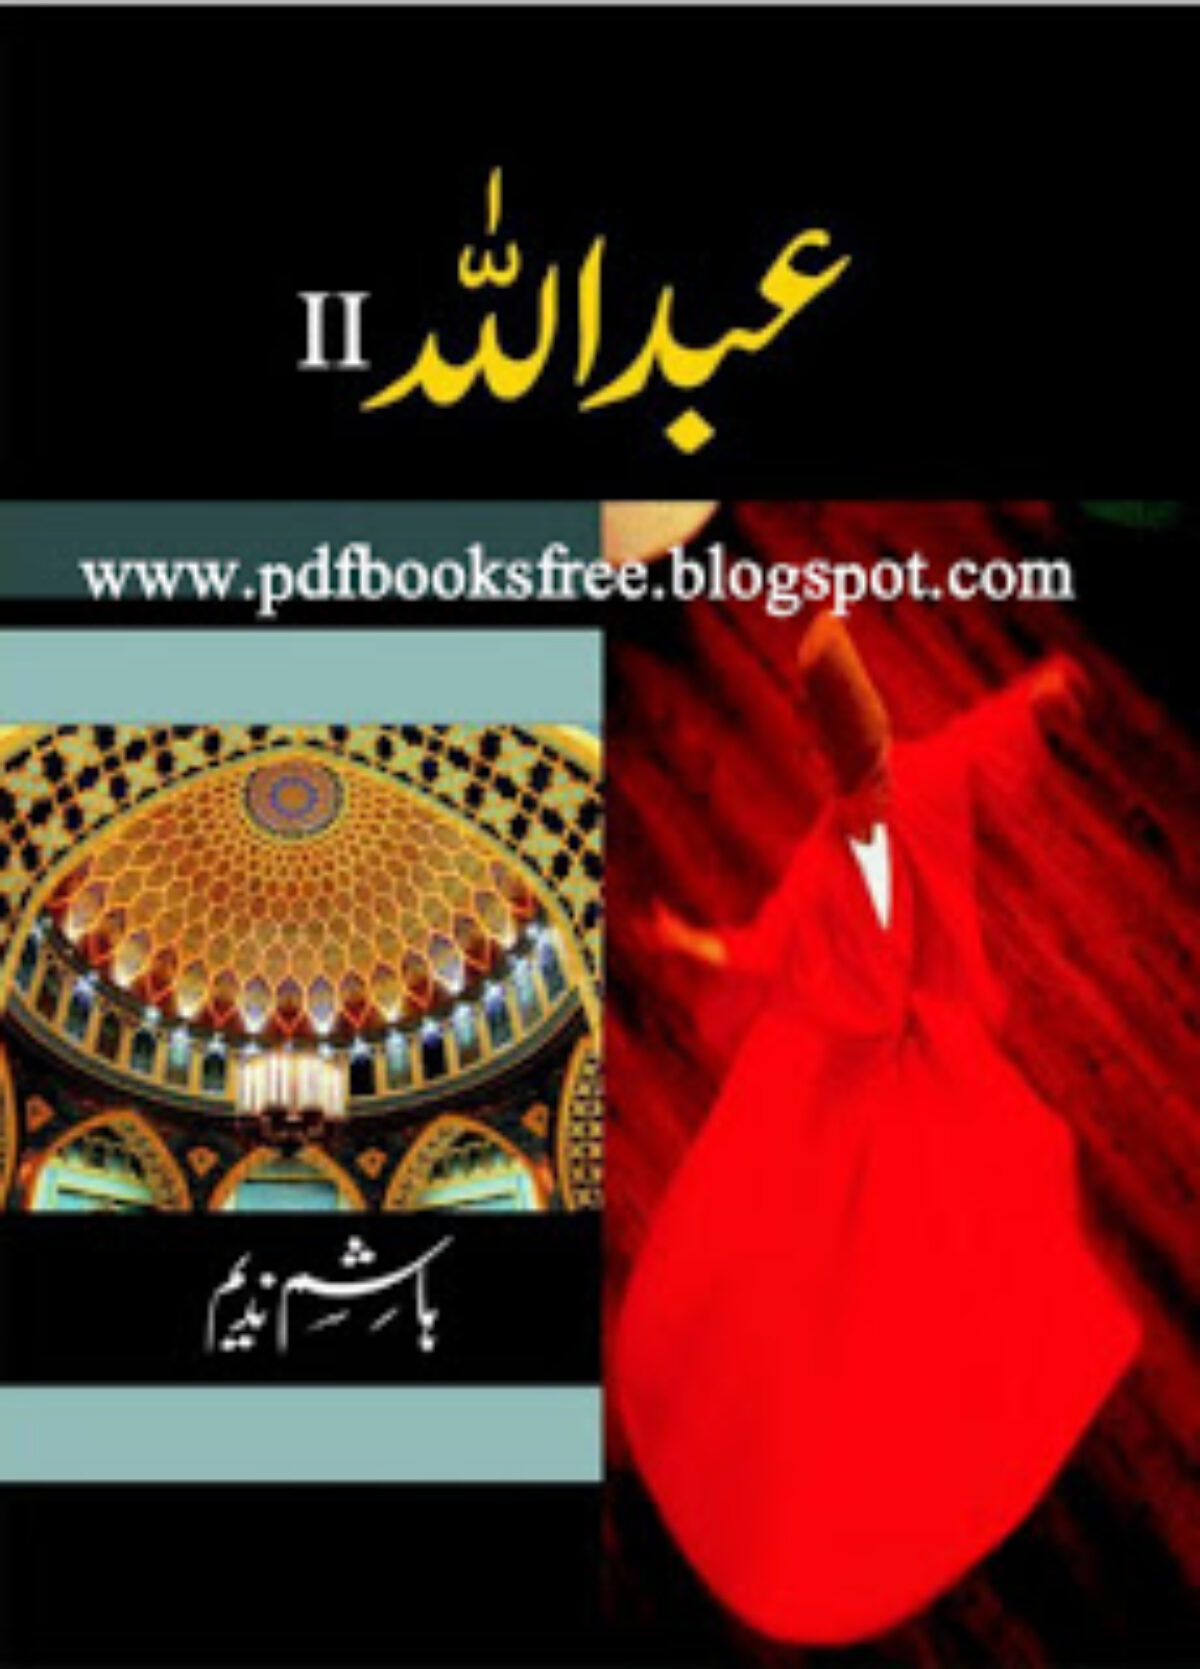 Abdullah 2 novel pdf free download a slow burn tigris eden pdf free download